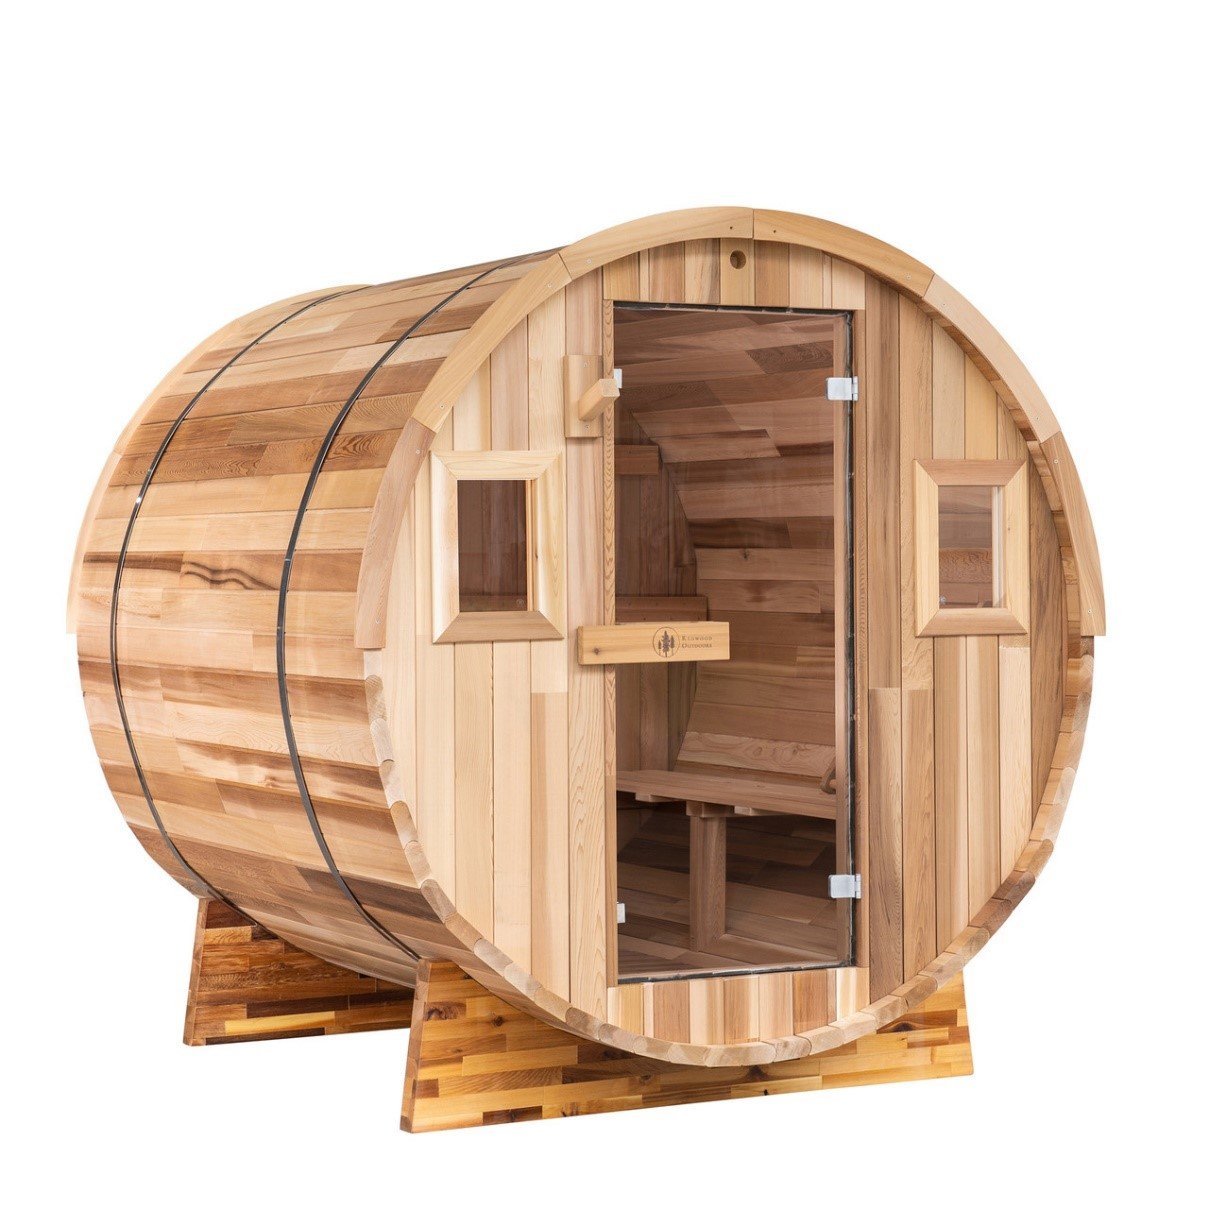 Locally crafted saunas